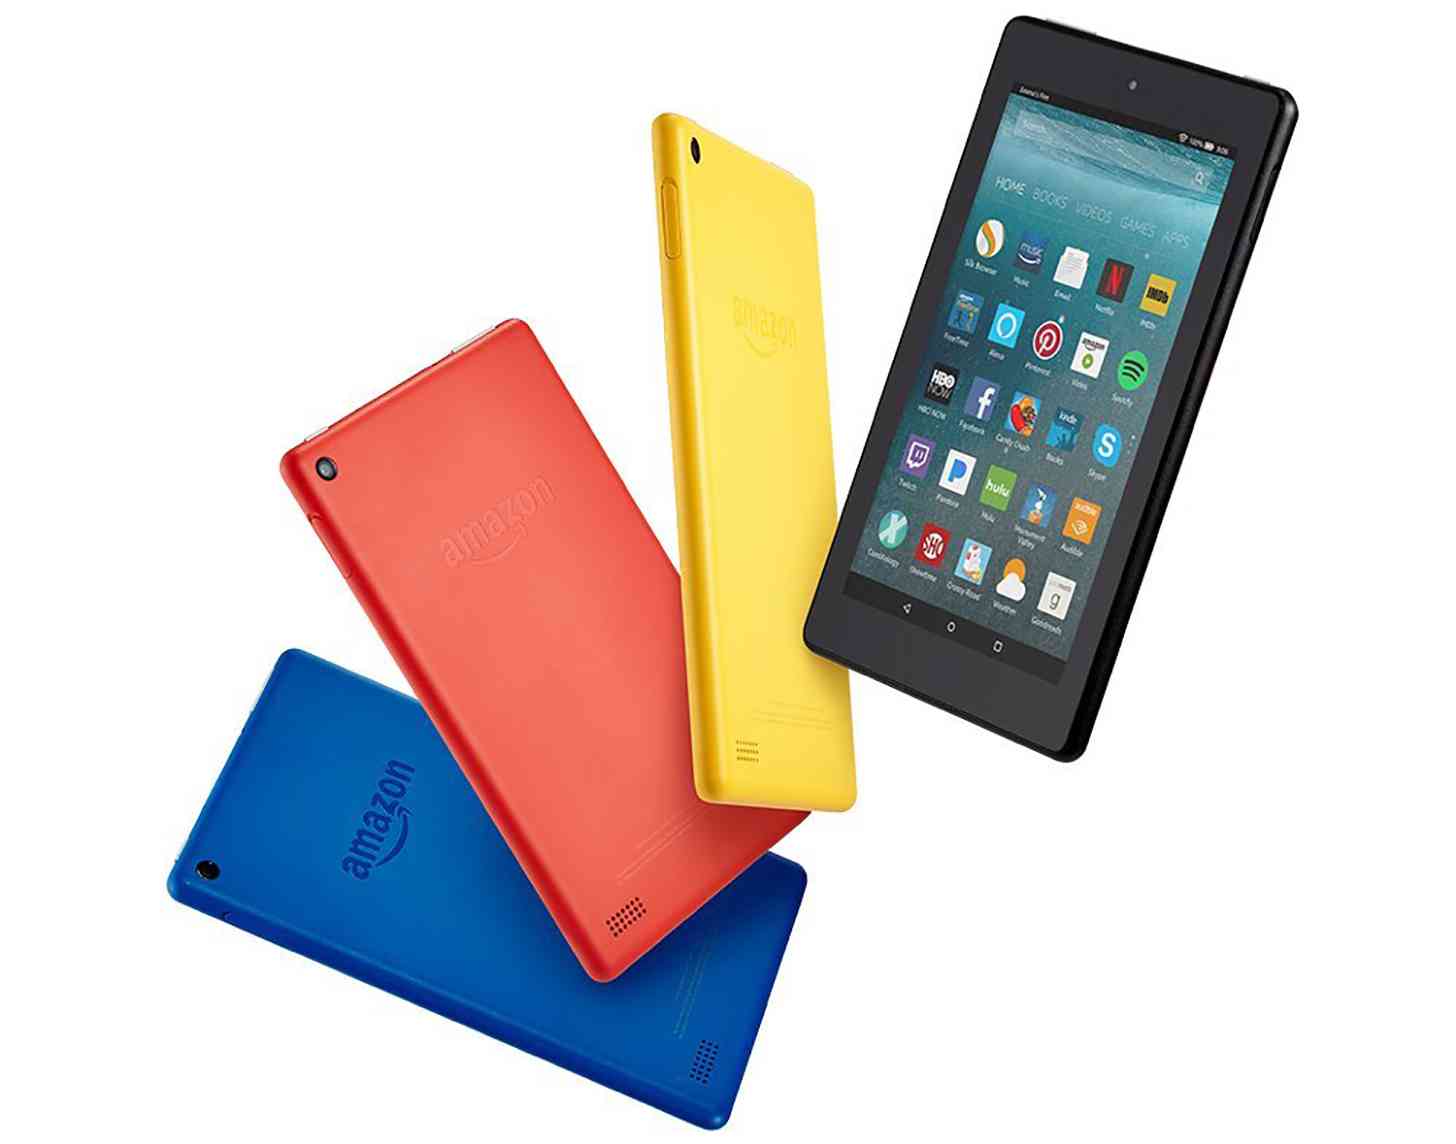 Amazon Fire 7 tablet colors